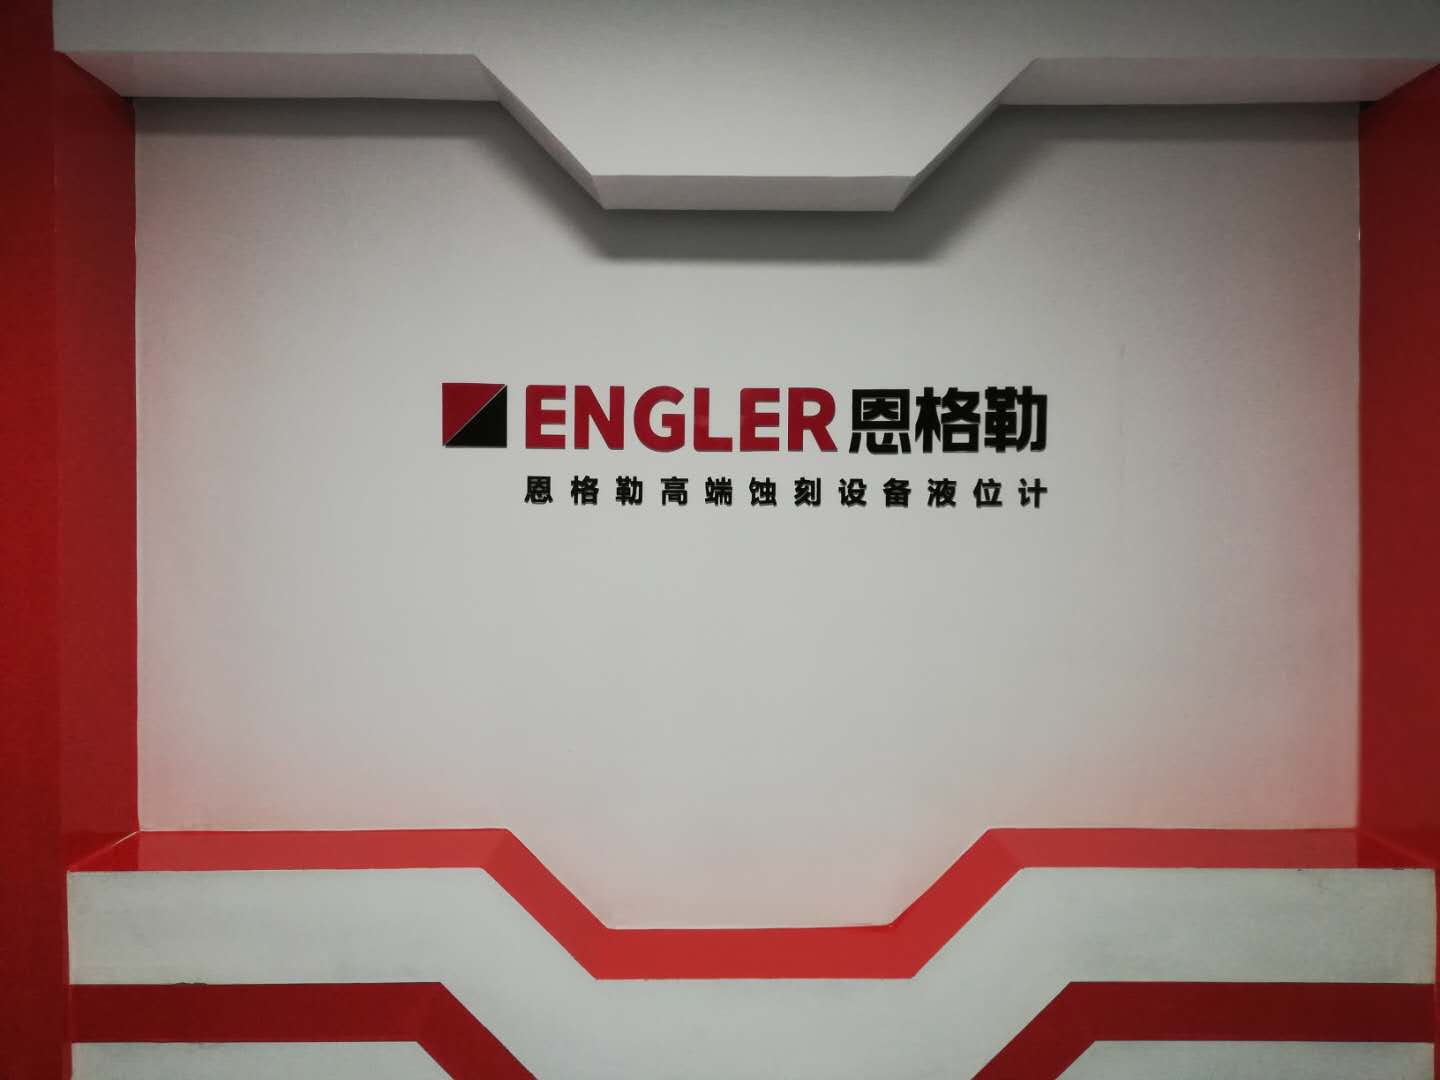 ENGLER恩格勒流体控制系统有限公司重新升级啦！